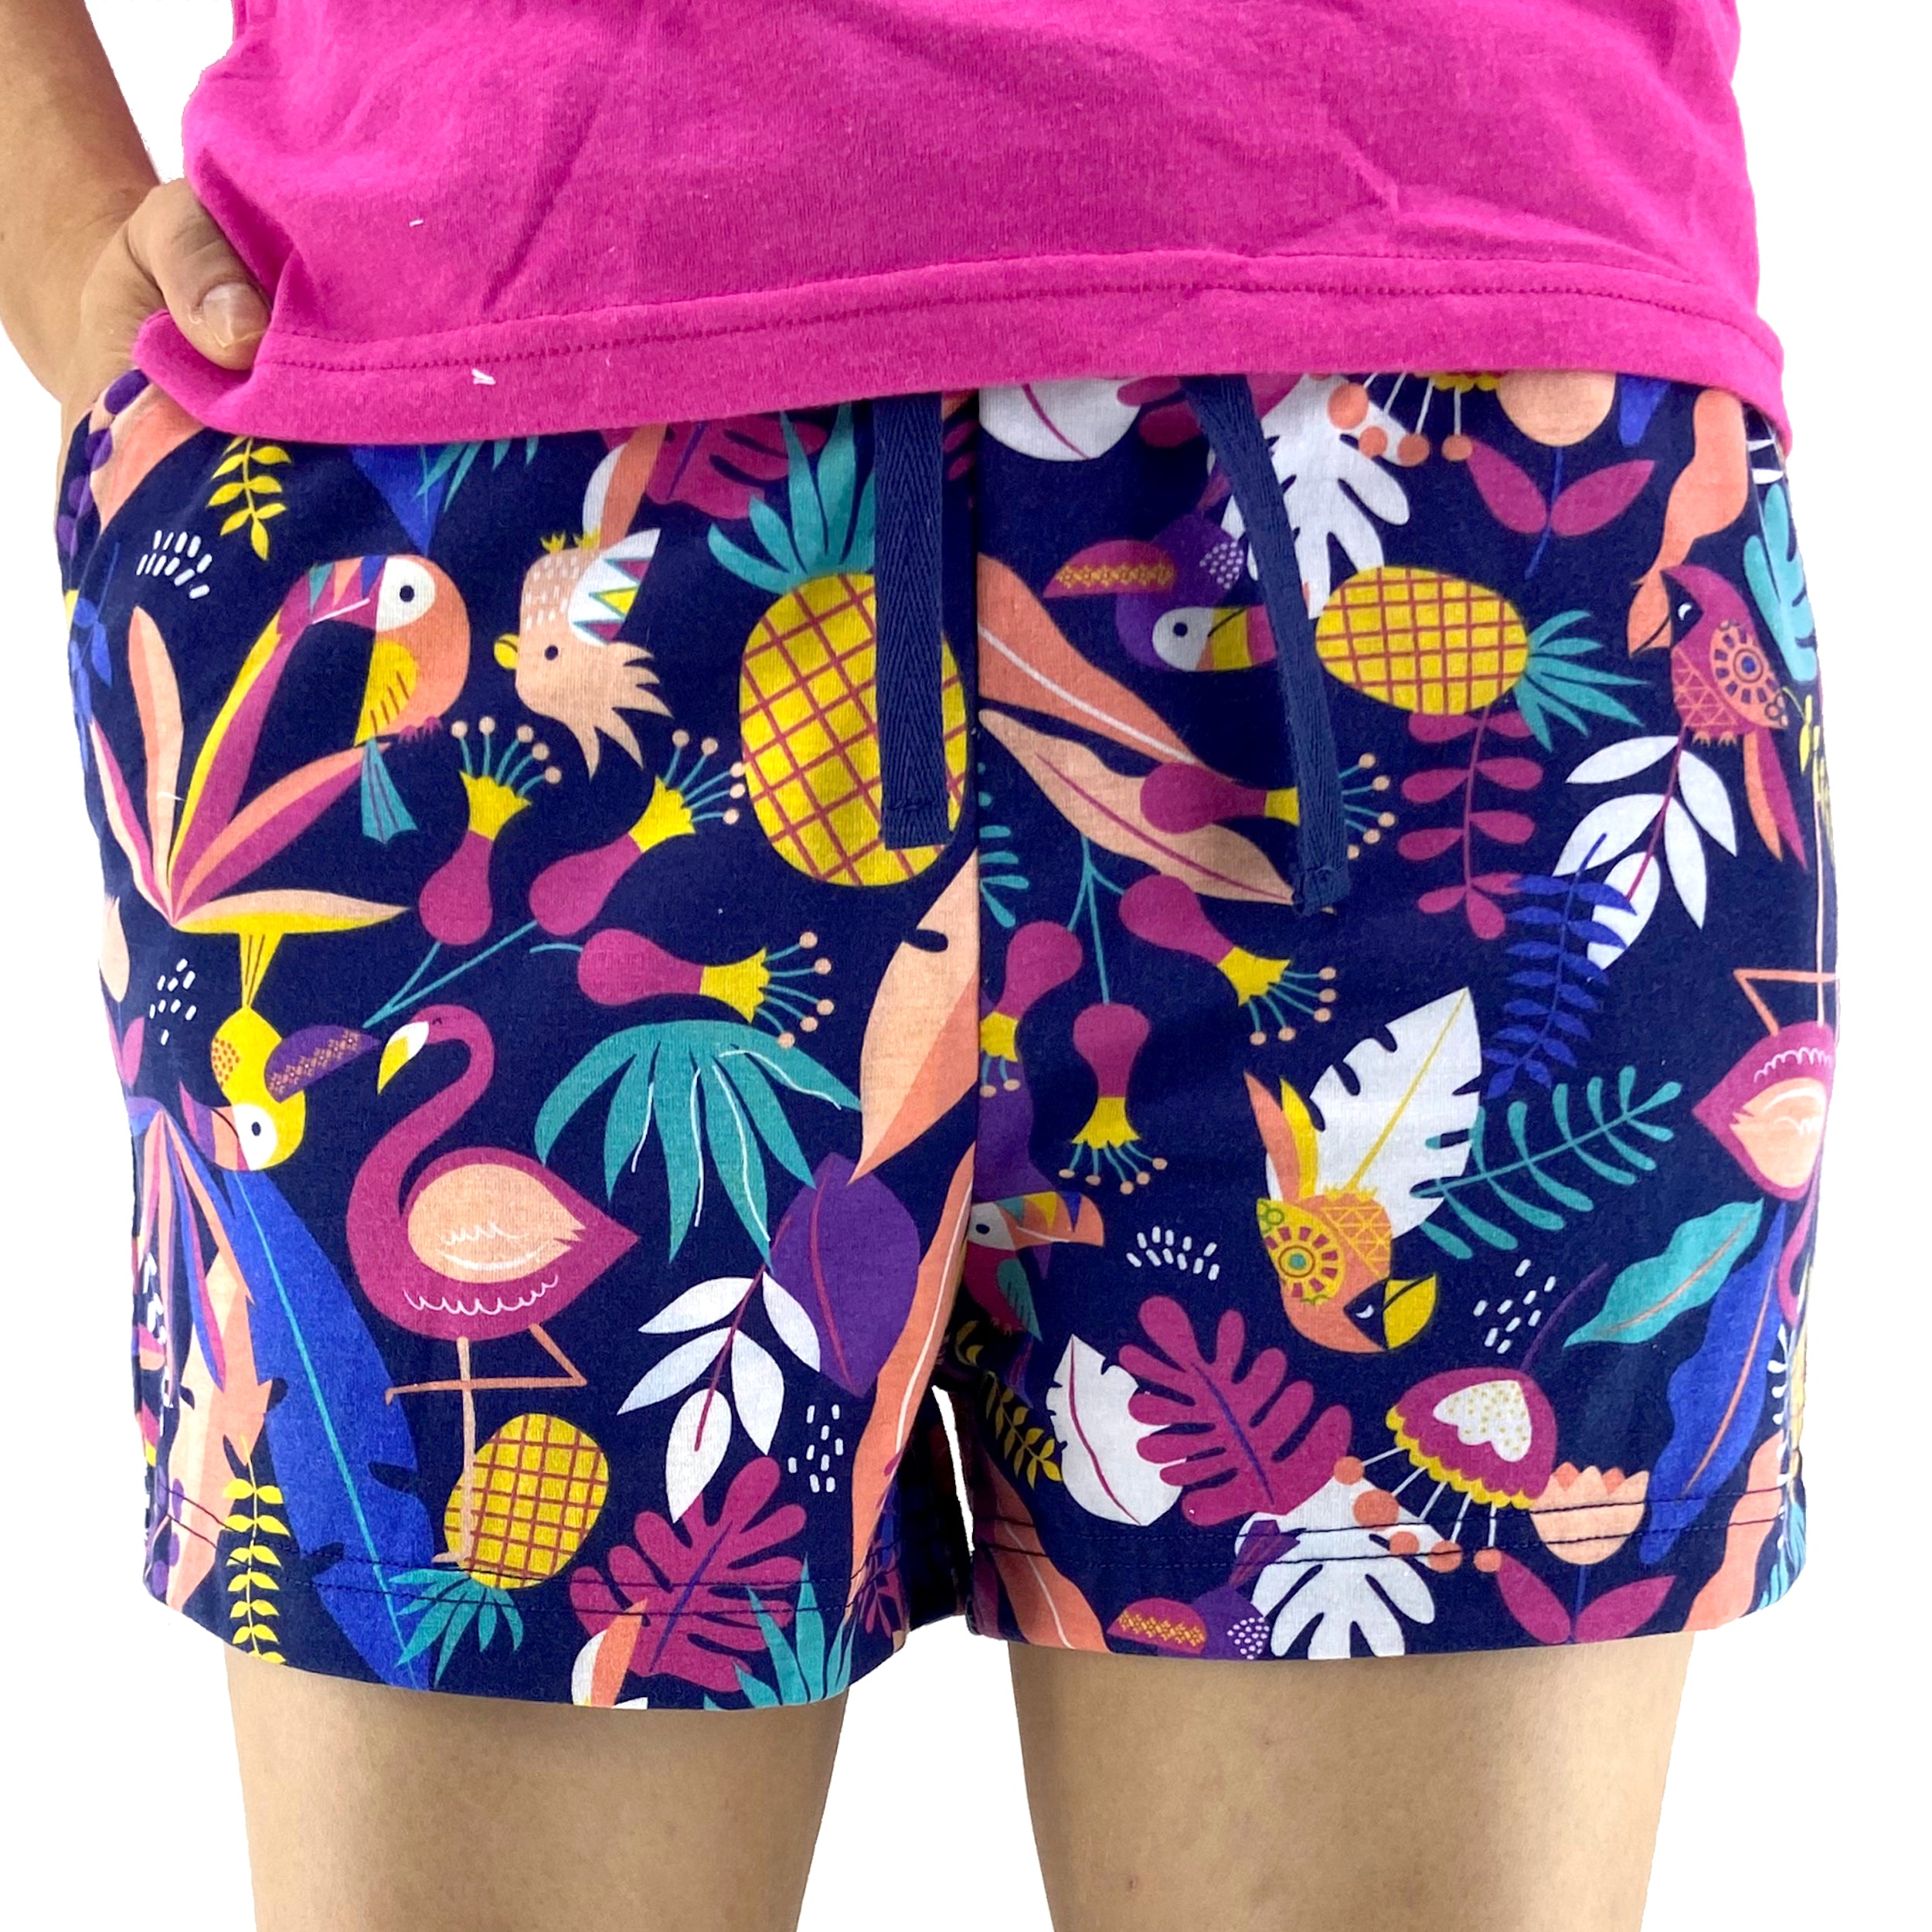 Buy Women's Pajama Shorts Online. Comfy Ladies Sleep Shorts